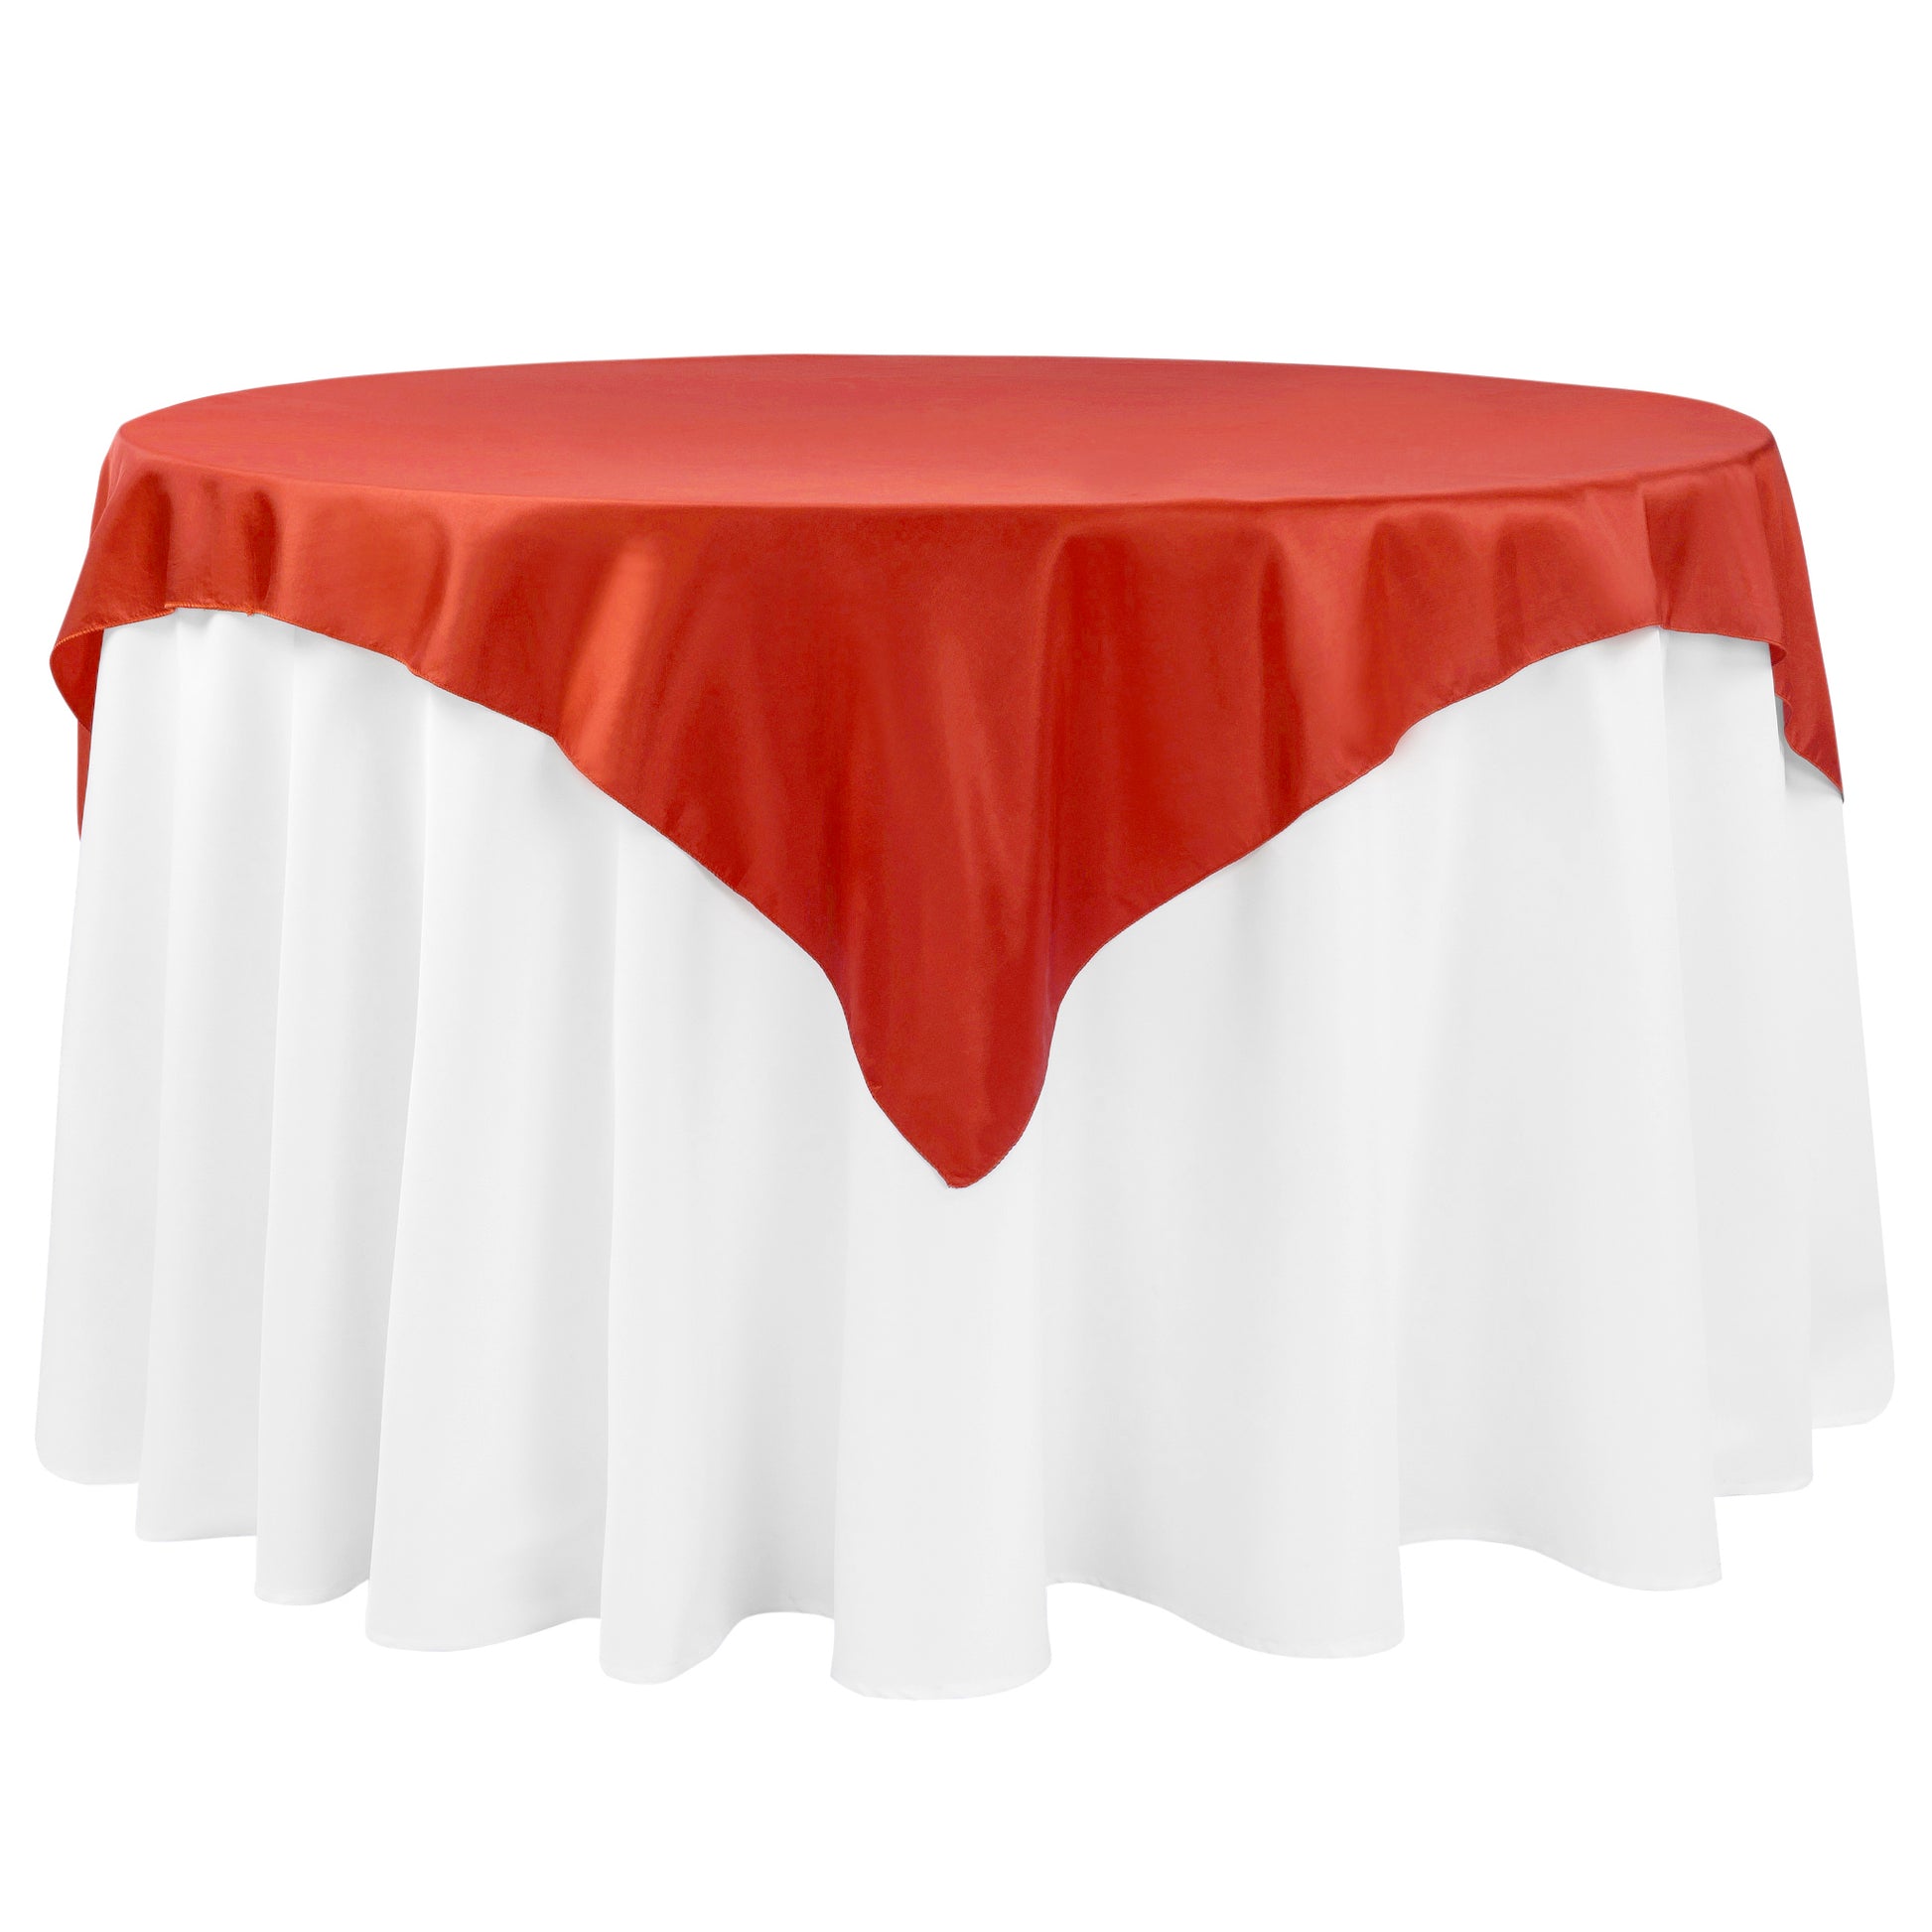 Taffeta Table Overlay Topper 54"x54" Square - Red - CV Linens